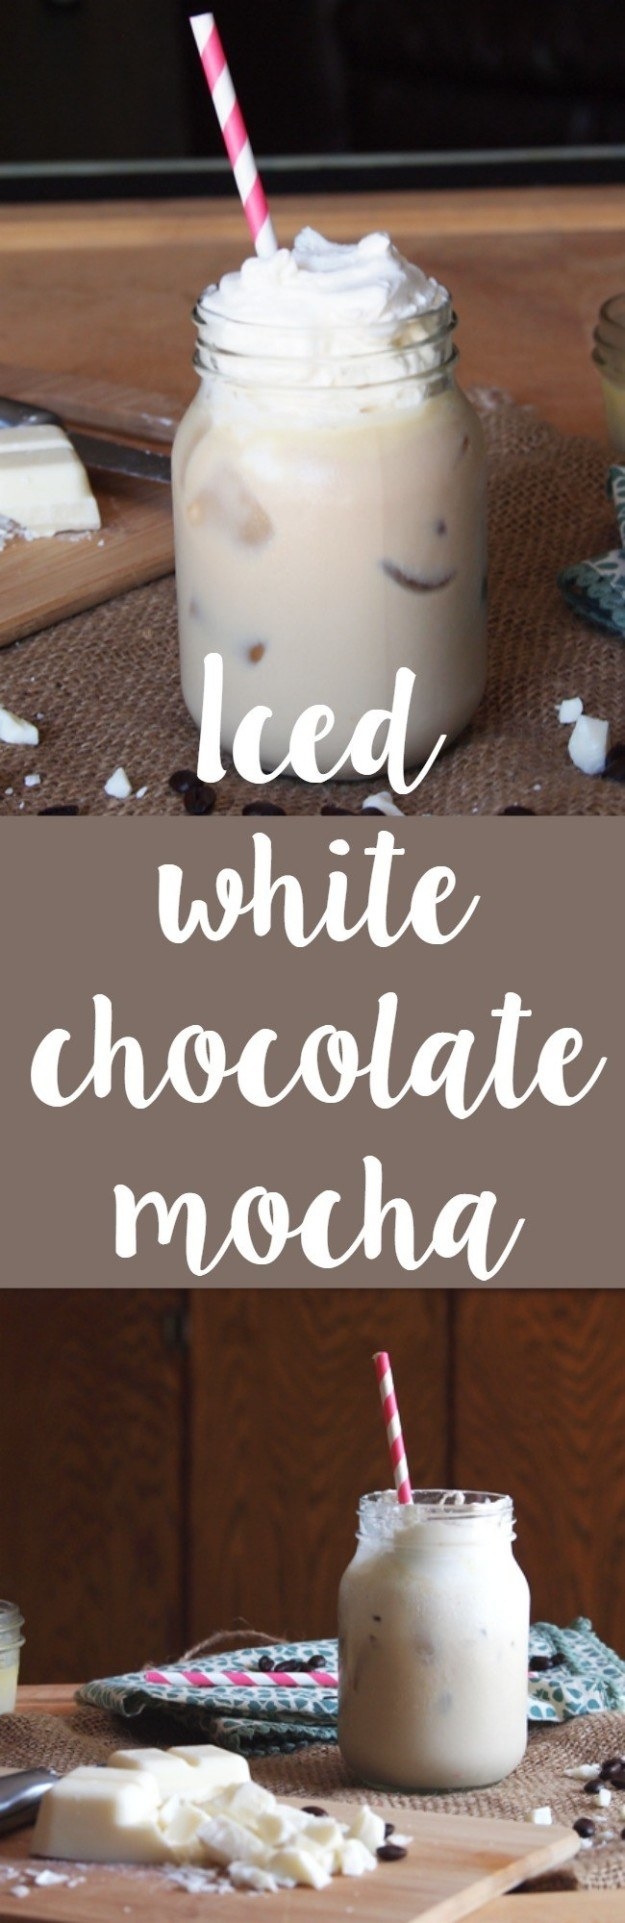 Iced white chocolate mocha